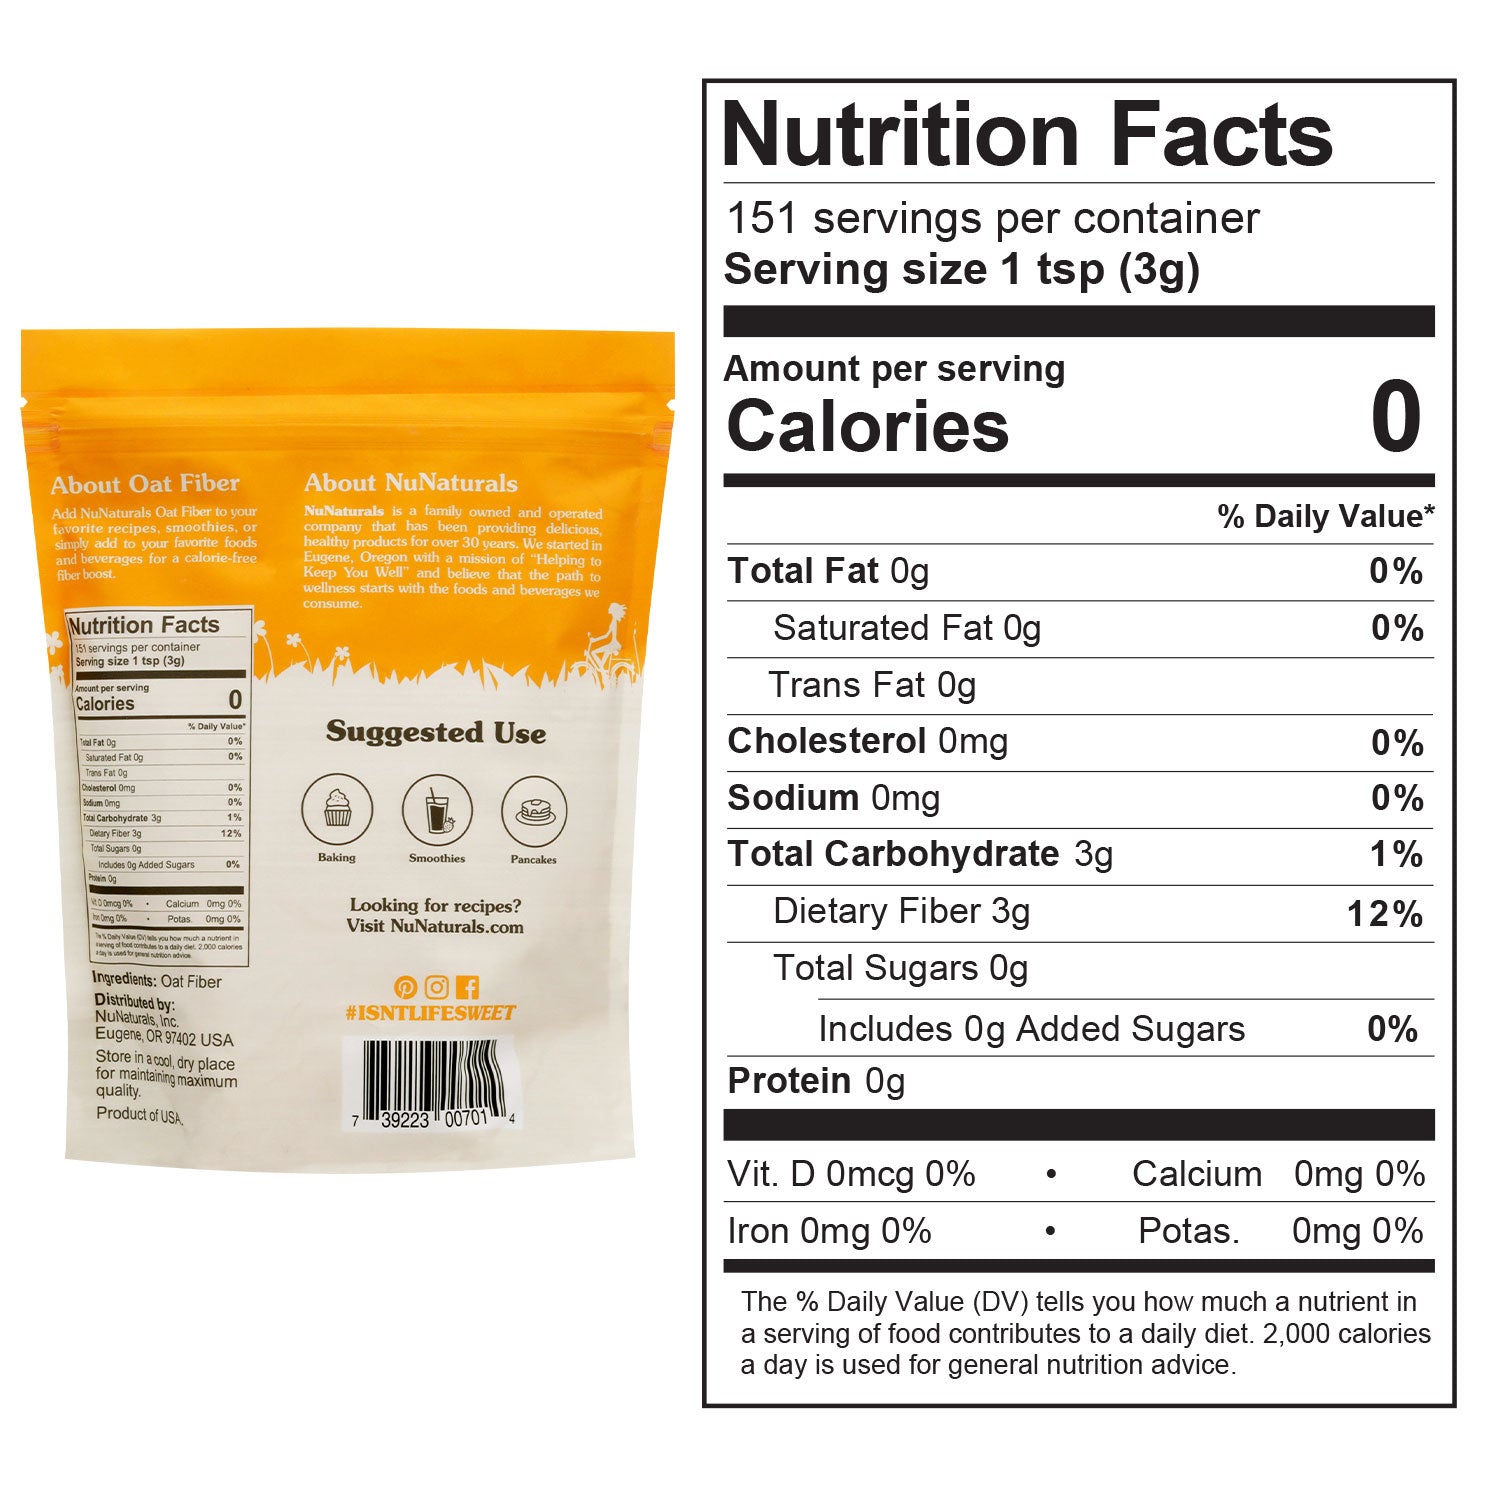 Nutrition Facts for NuNaturals Oat Fiber 